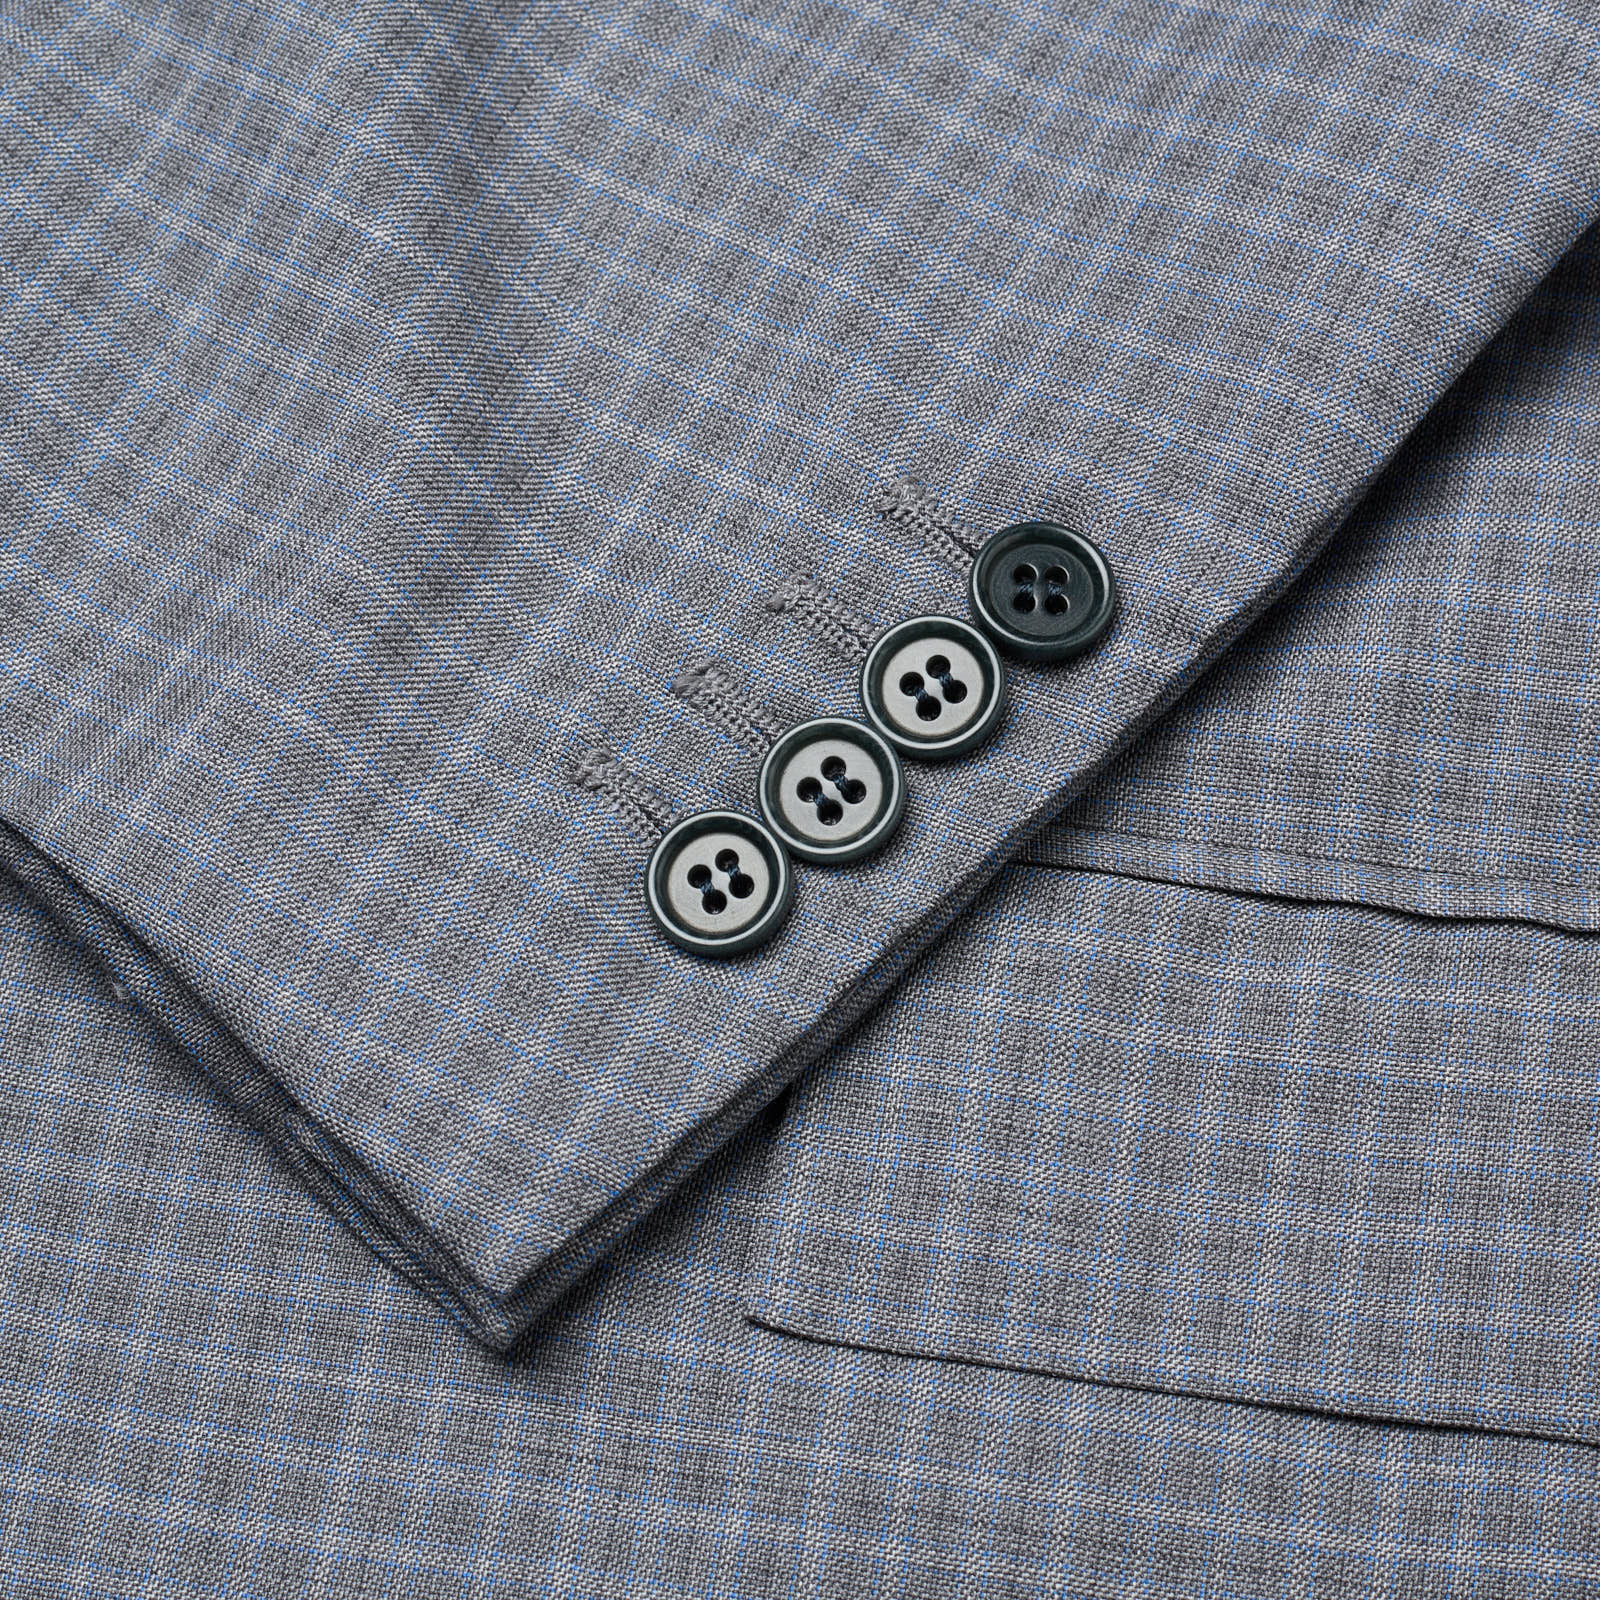 KITON Napoli for VANNUCCI Handmade Blue-Gray Plaid  Suit EU 50 NEW US 40